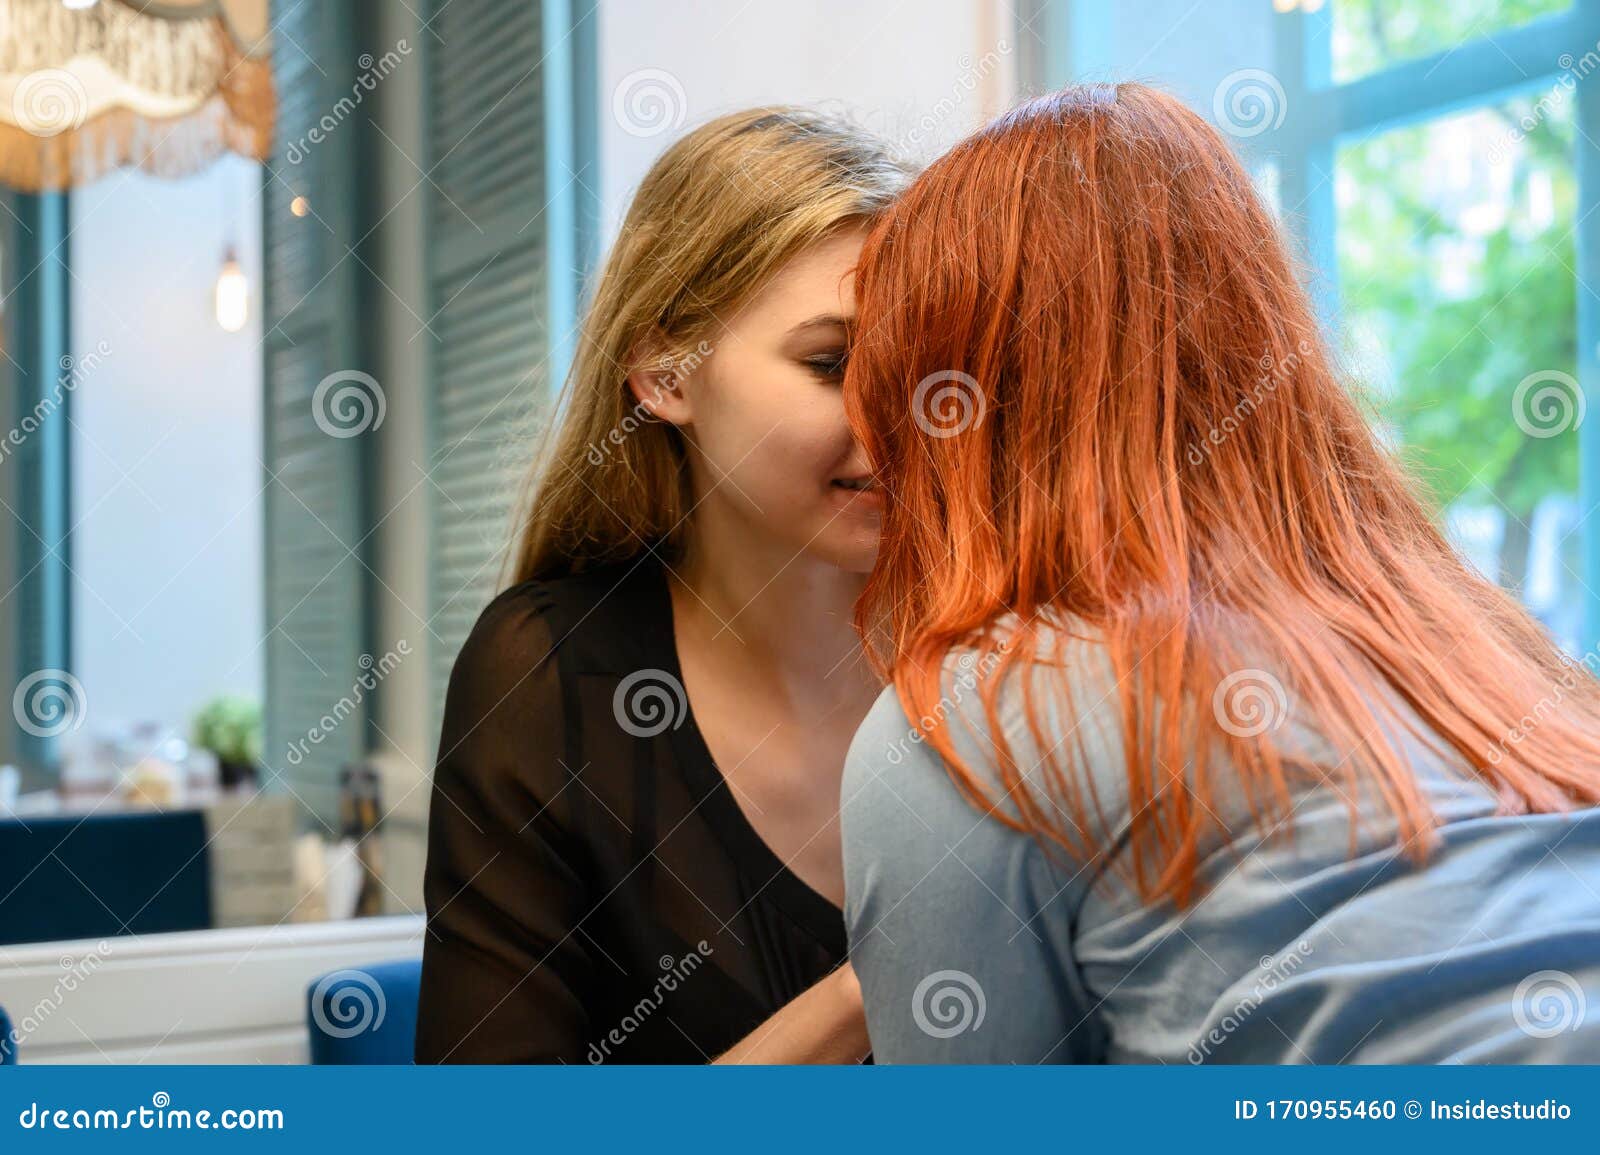 Hot Black Lesbian Kissing